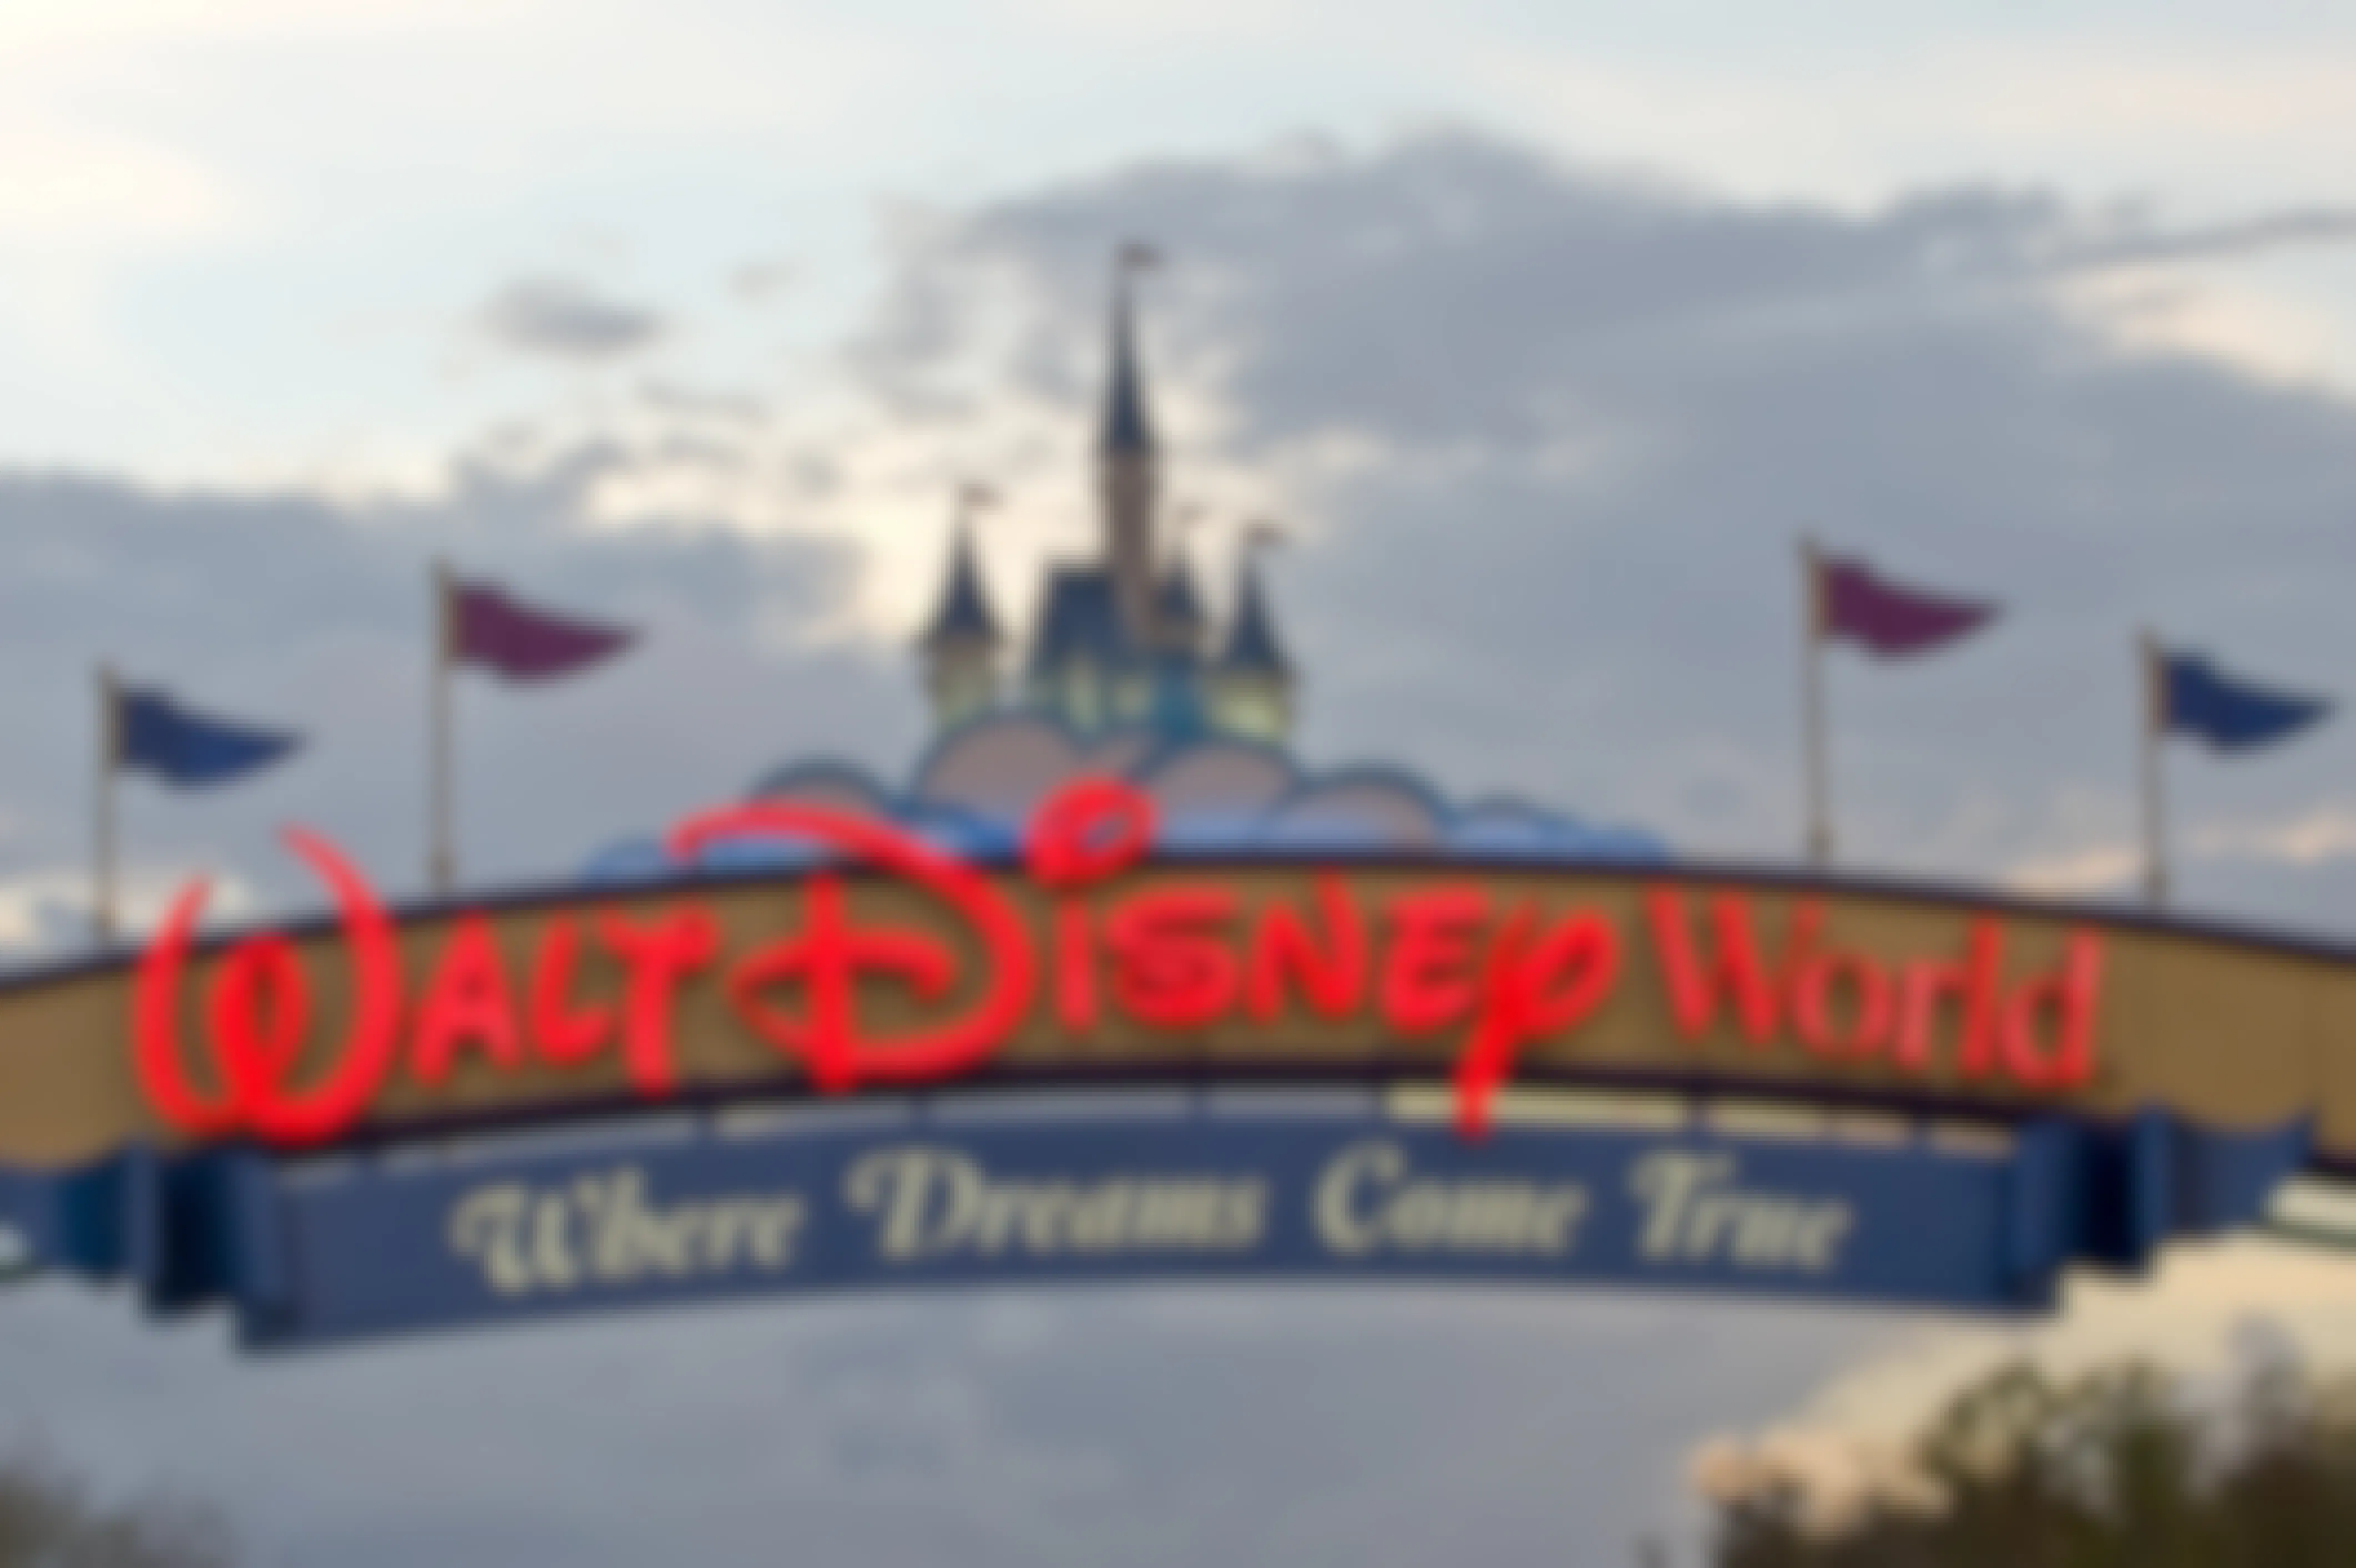 The sign for Walt Disney World Park.